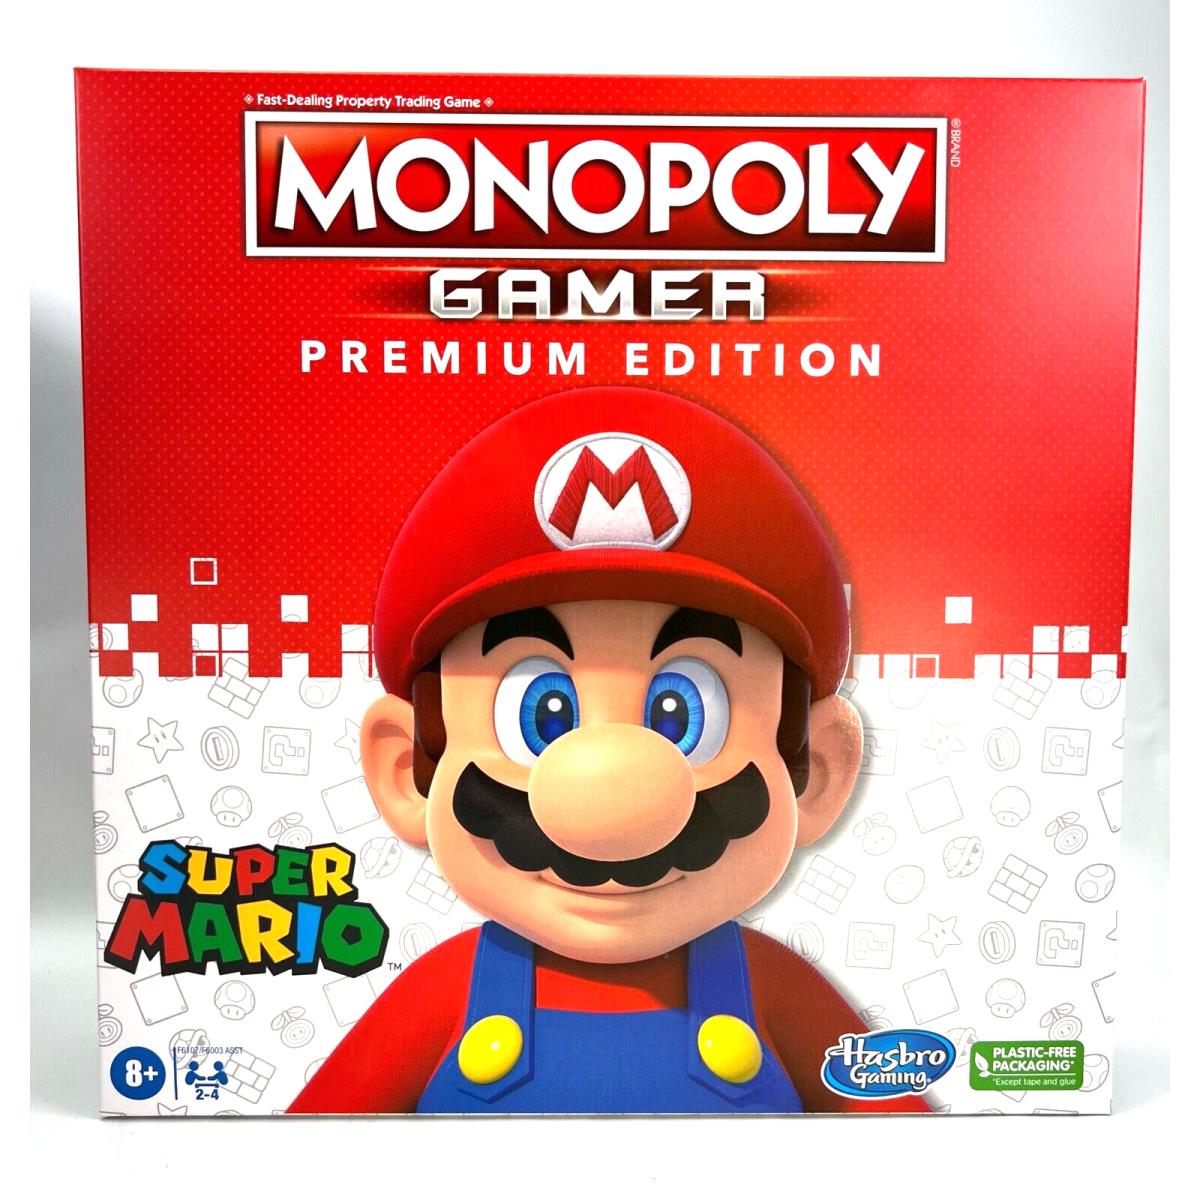 Super Mario Bros Monopoly Gamer Premium Edition Board Game Hasbro Feat Bowser